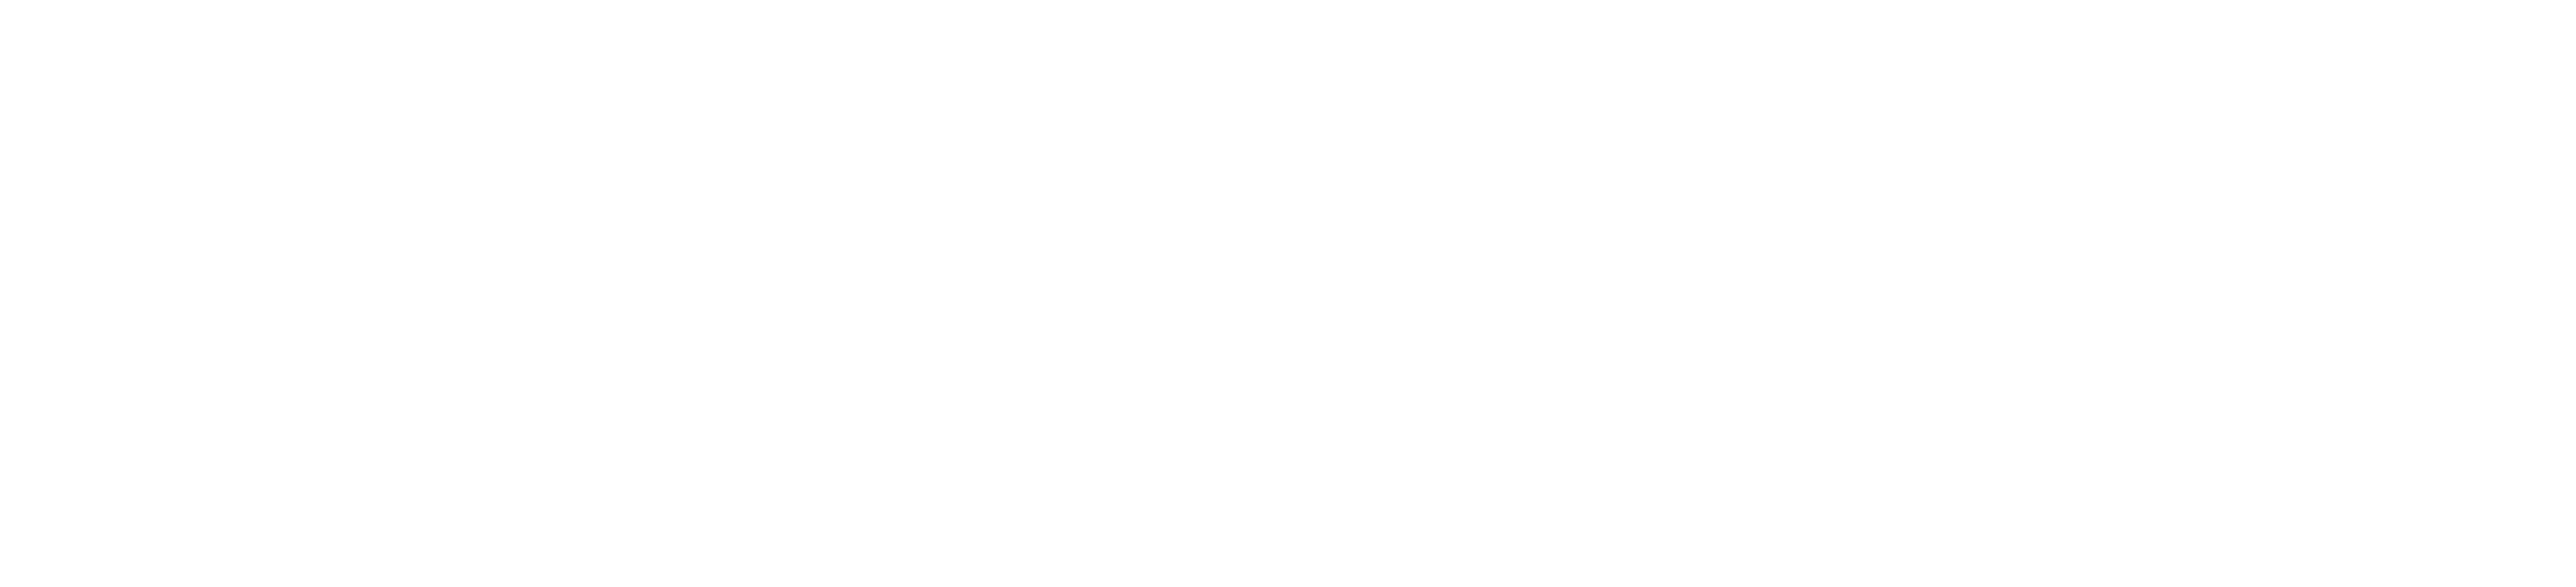 Nuke 15.0 Logo_White-1